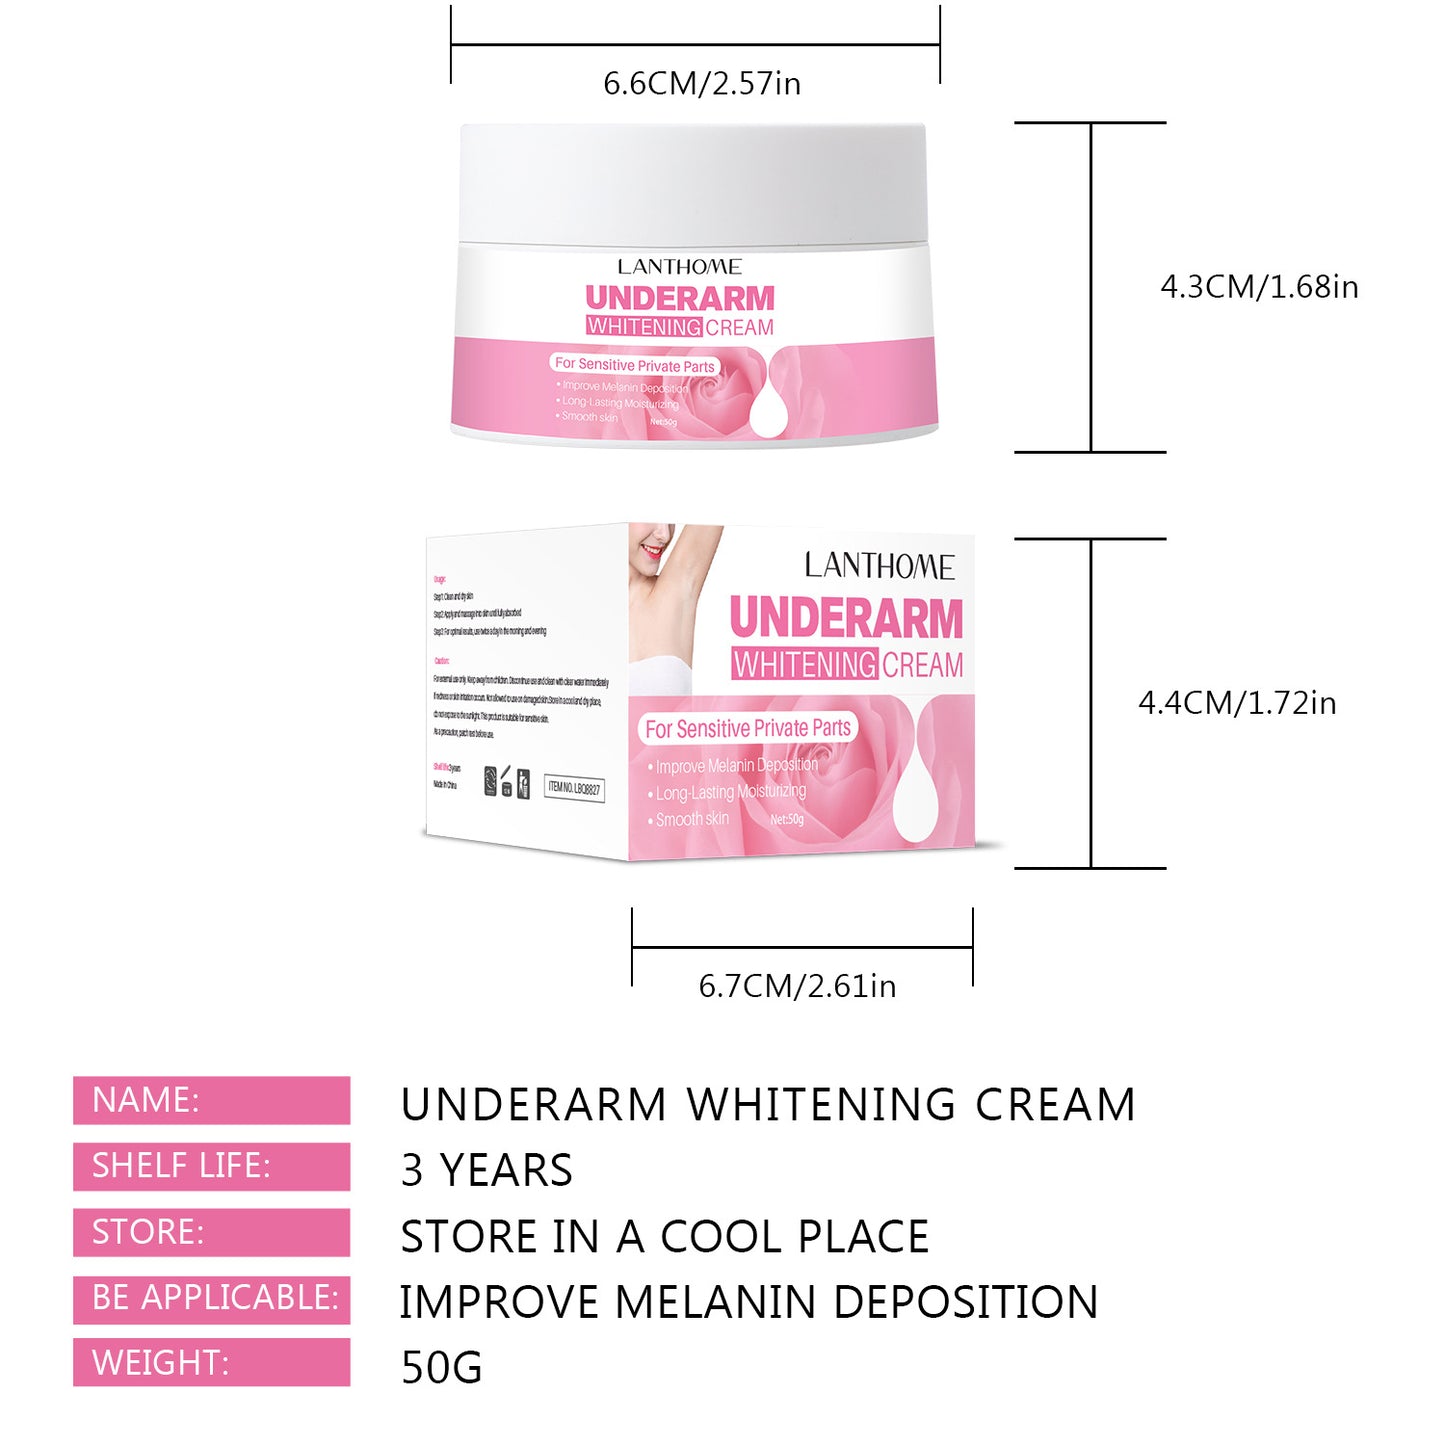 Customized Private Area Whitening Cream, Long-lasting Moisturizing Body Cream OEM Manufacturer 394